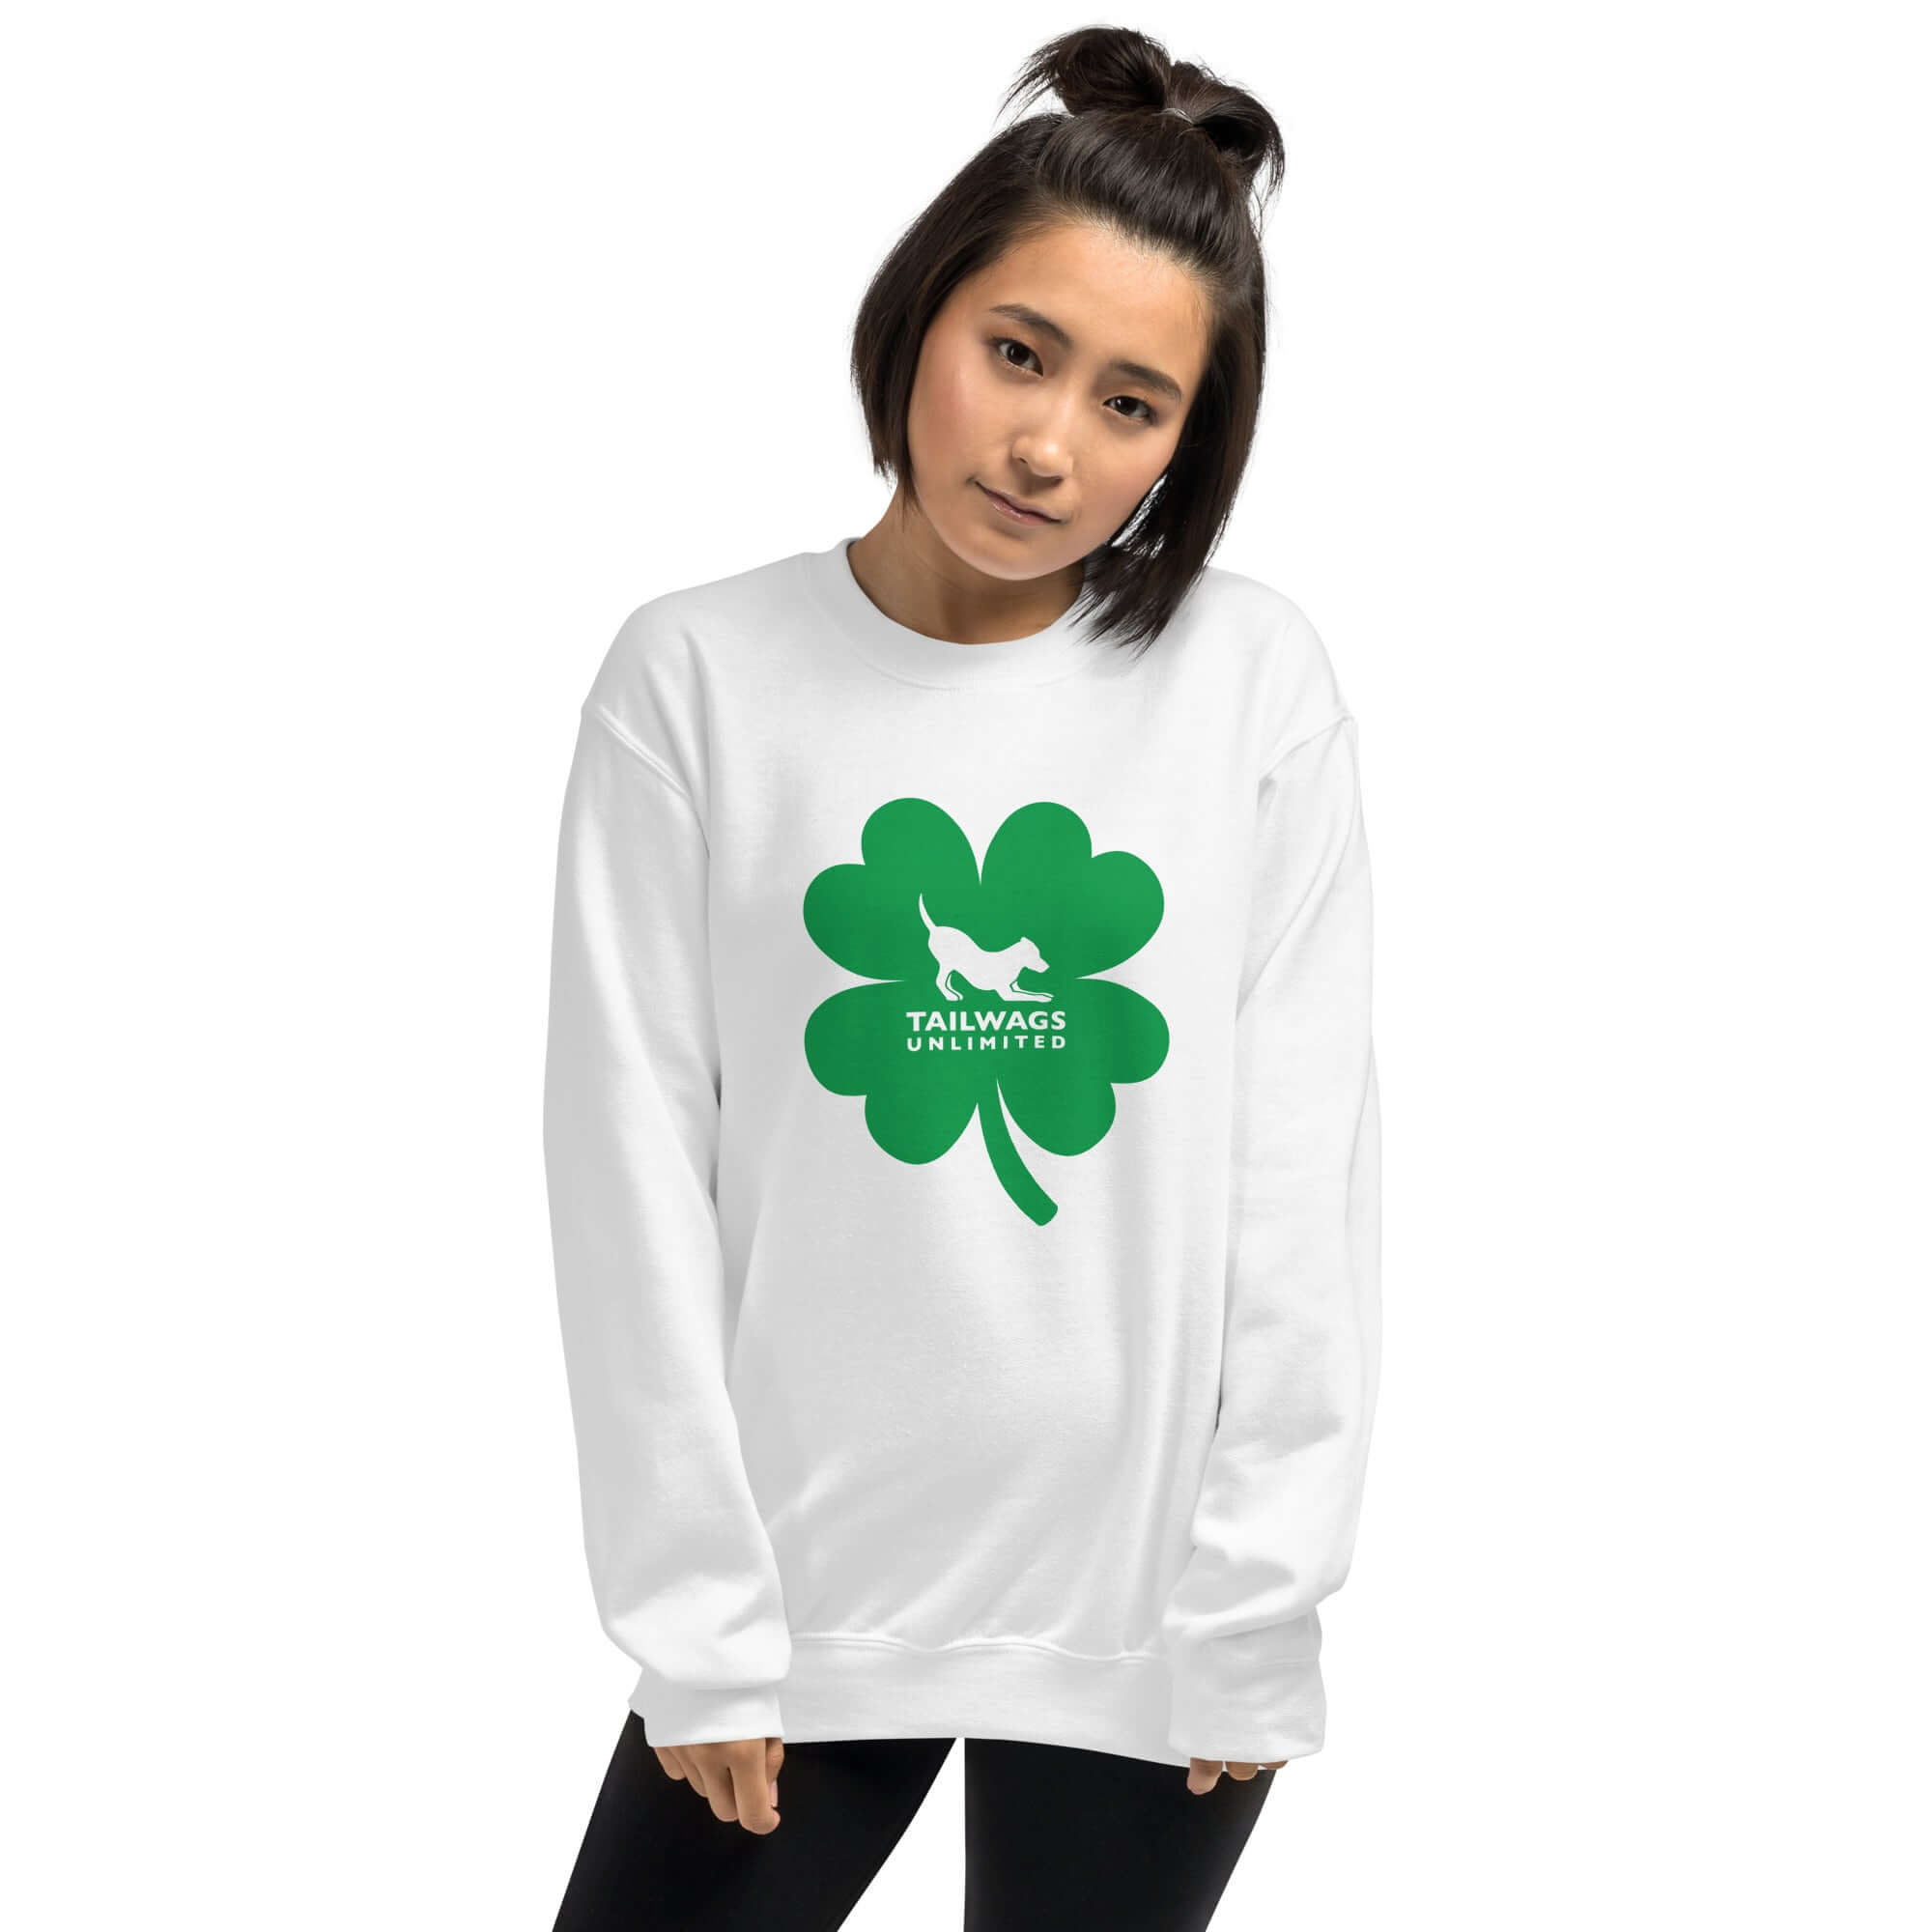 Green Four Leaf Clover Logo Crewneck Sweatshirt - TAILWAGS UNLIMITED